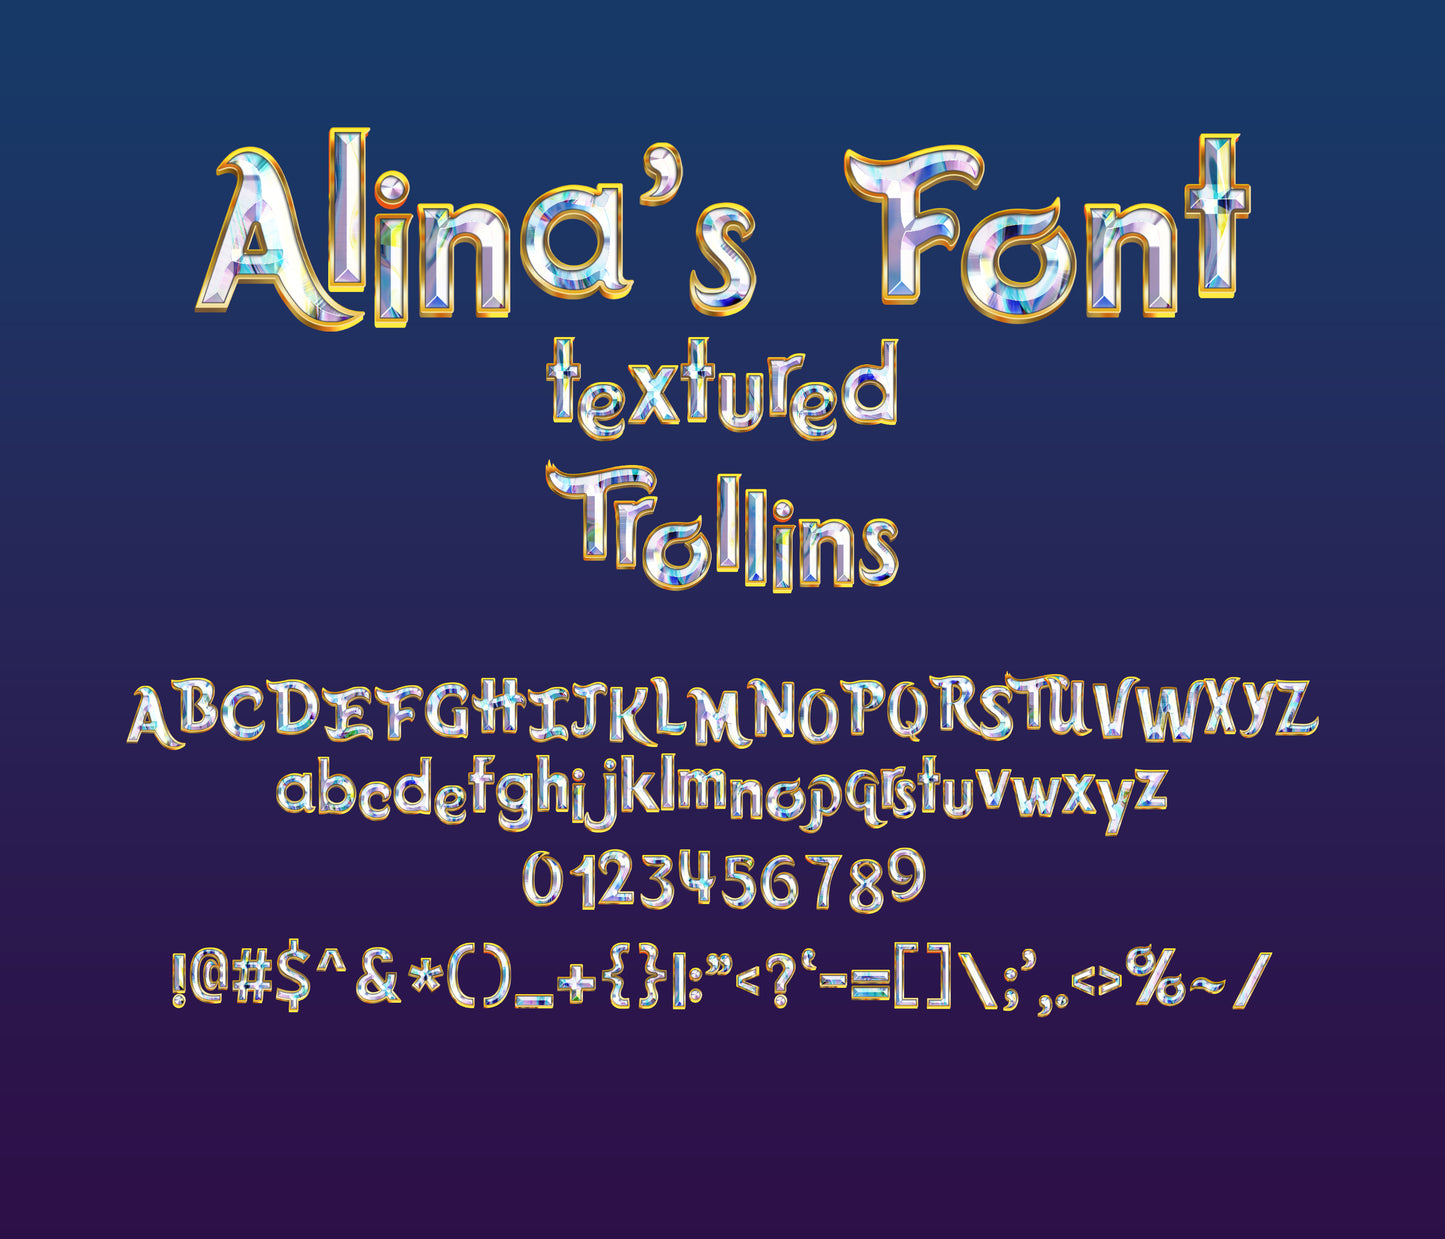 Trolls Band Together Textured Font